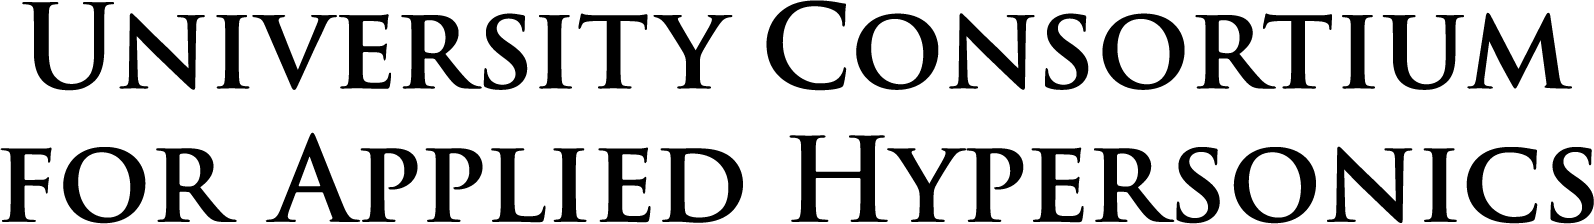 University Consortium for Applied Hypersonics Logo